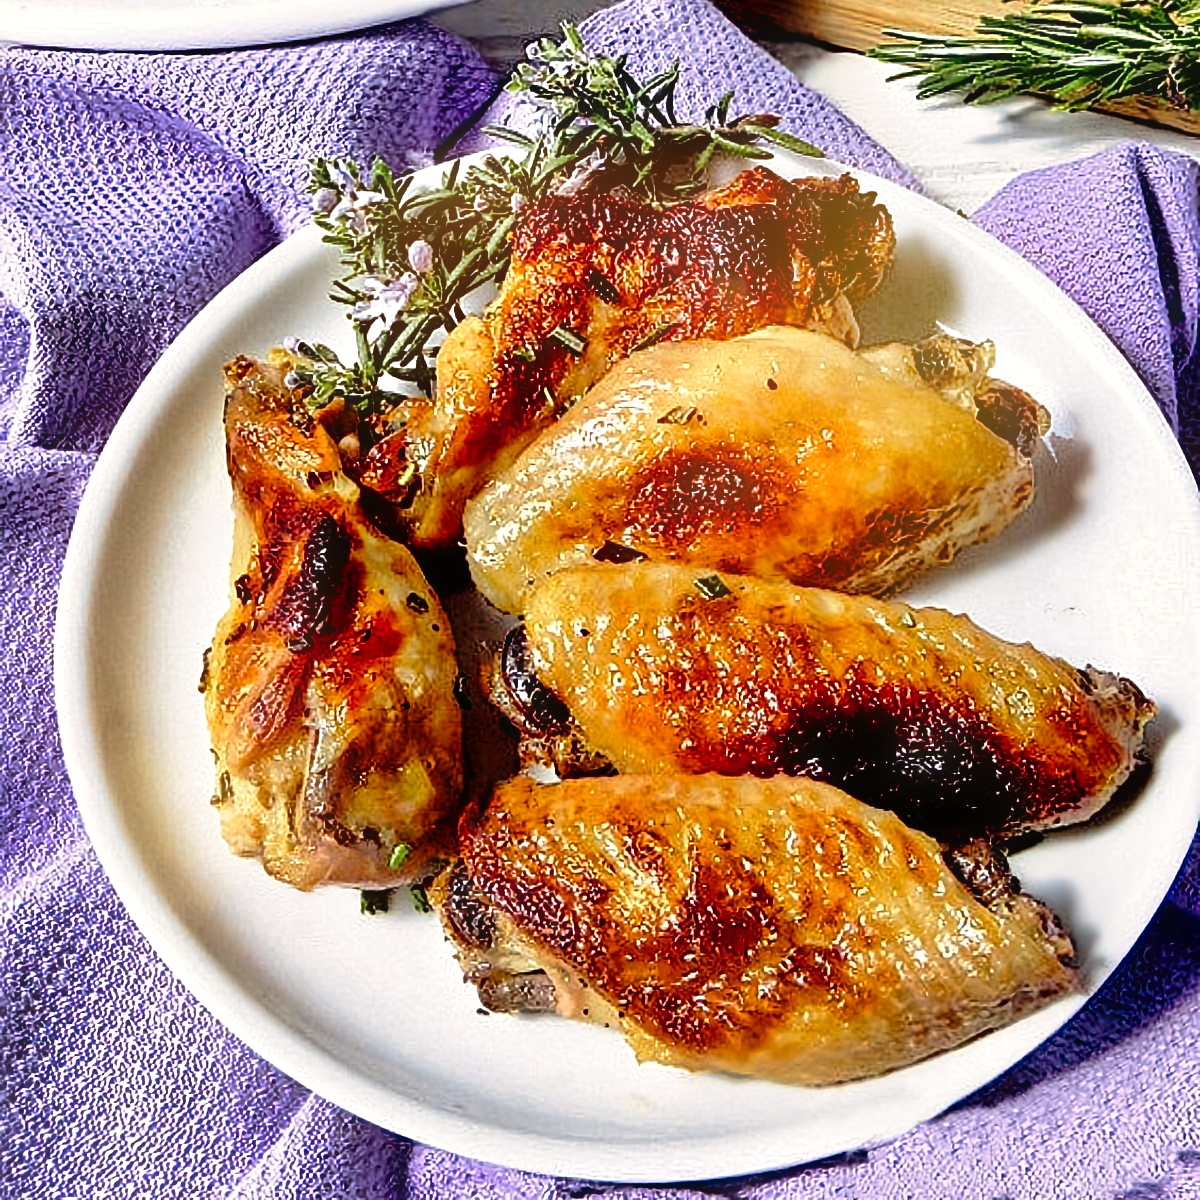 recipe with roasted garlic - 6. Roasted Garlic Rosemary Chicken Wings